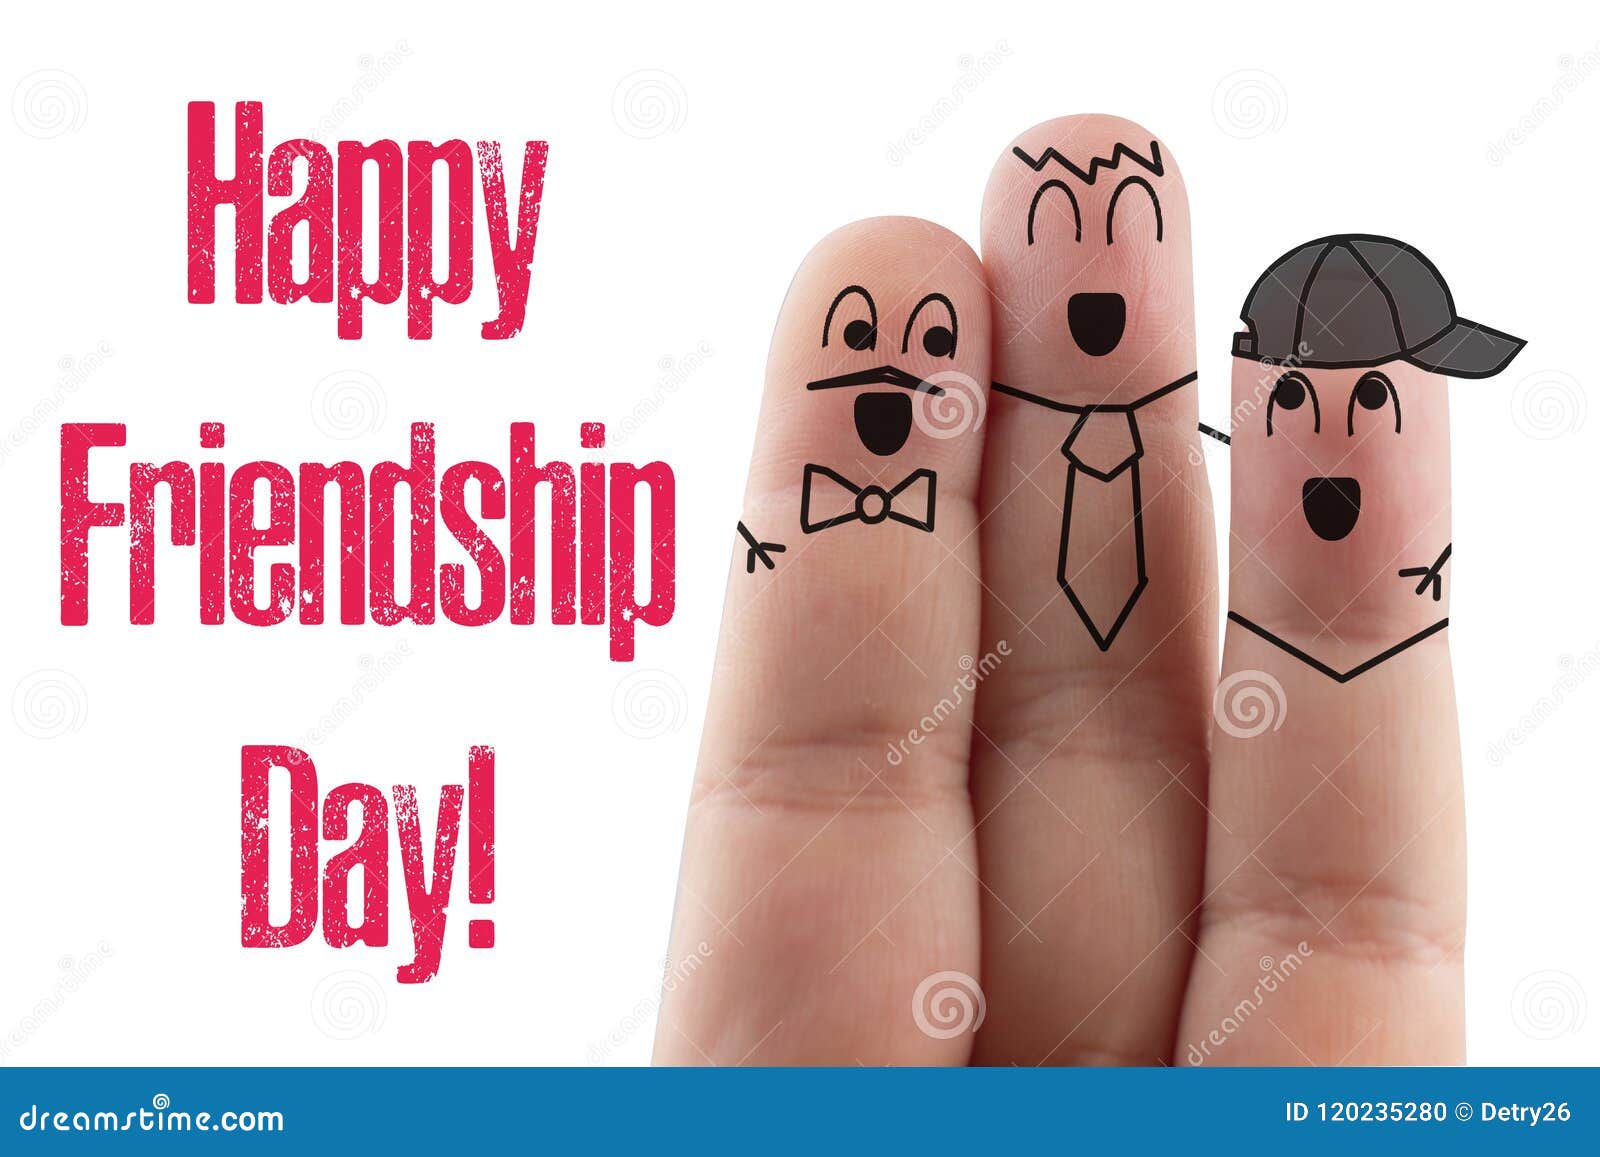 137,641 Happy Friendship Day Stock Photos - Free & Royalty-Free ...